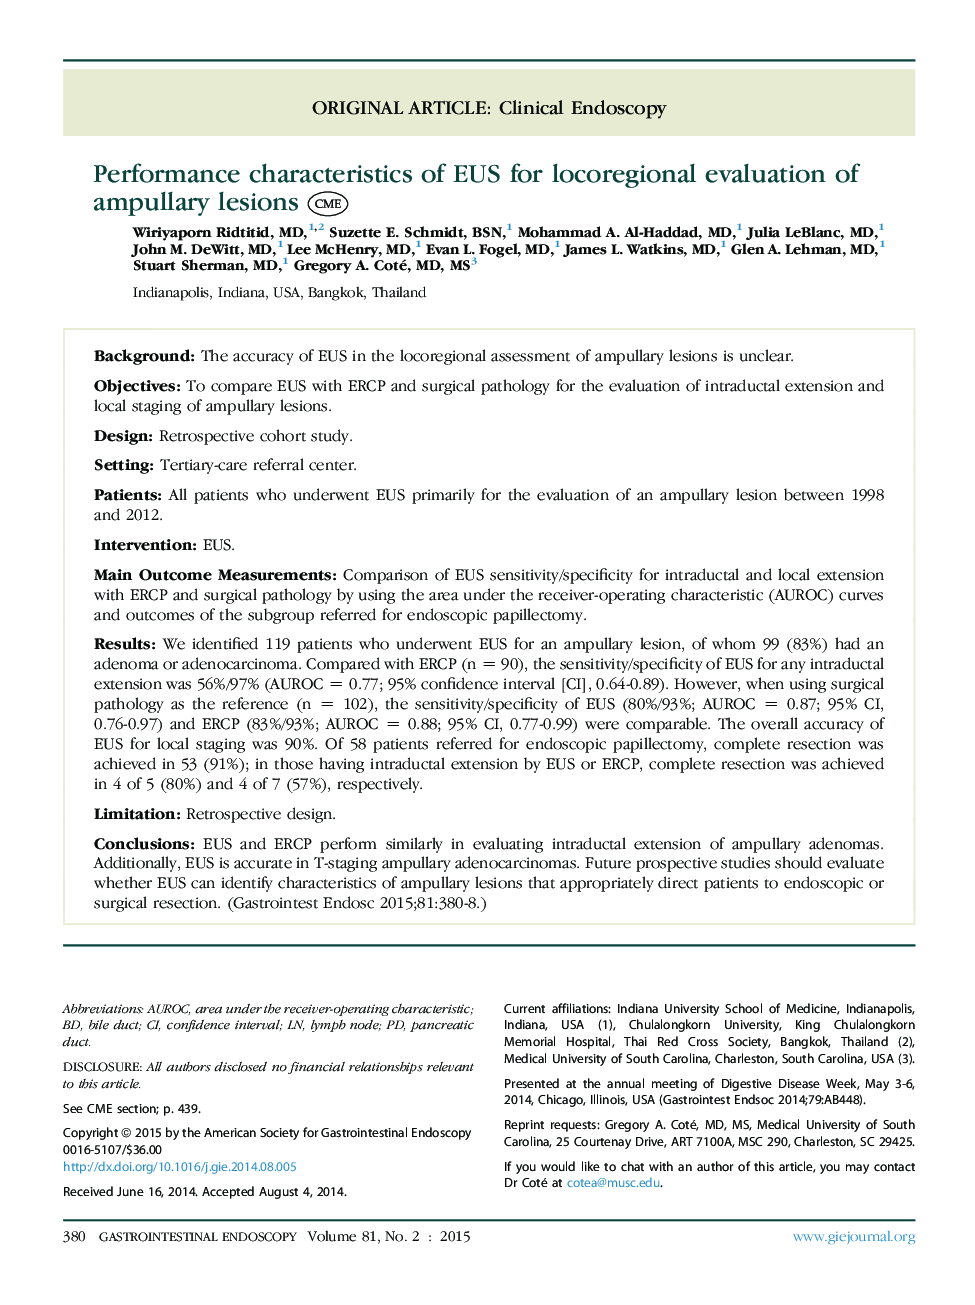 Performance characteristics of EUS for locoregional evaluation of ampullary lesions 